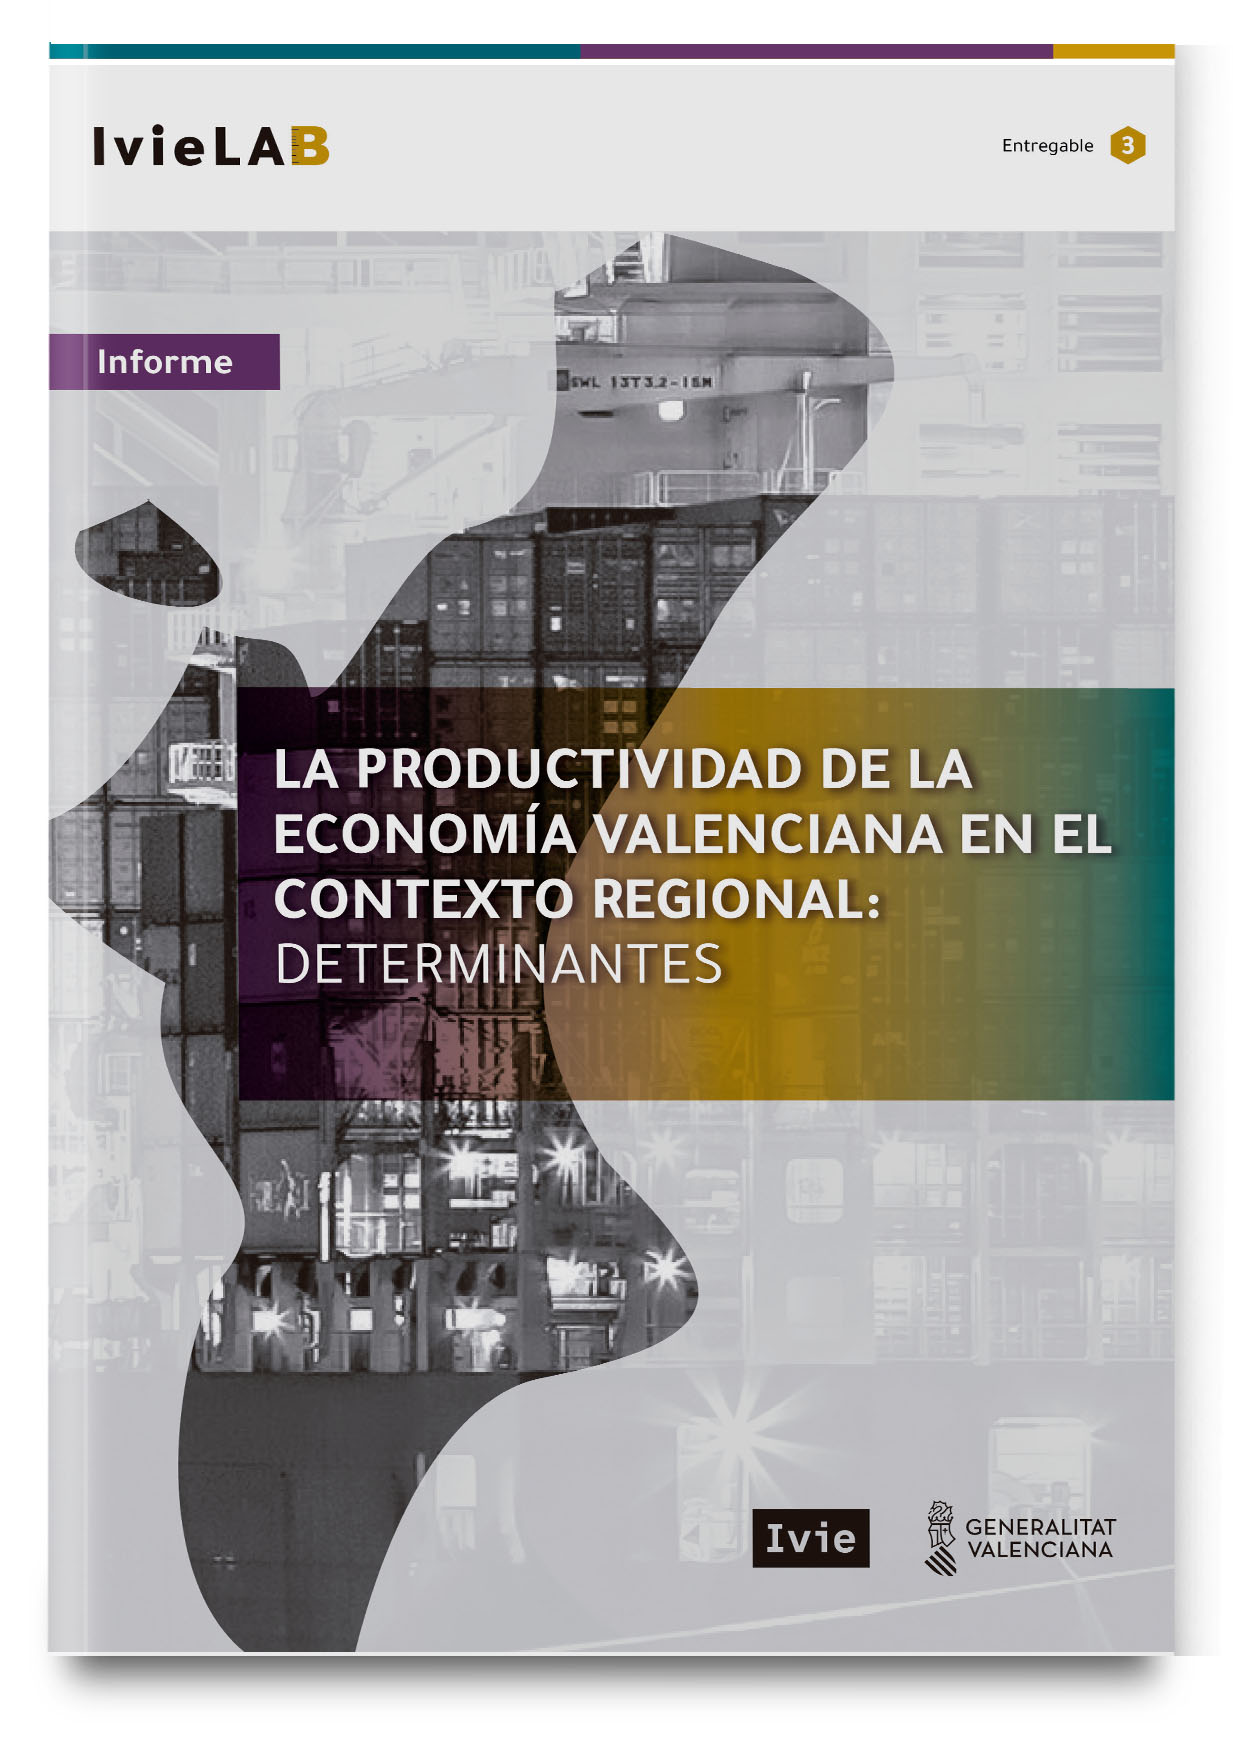 IvieLAB. La productividad de la Comunitat Valenciana en el contexto regional: determinantes